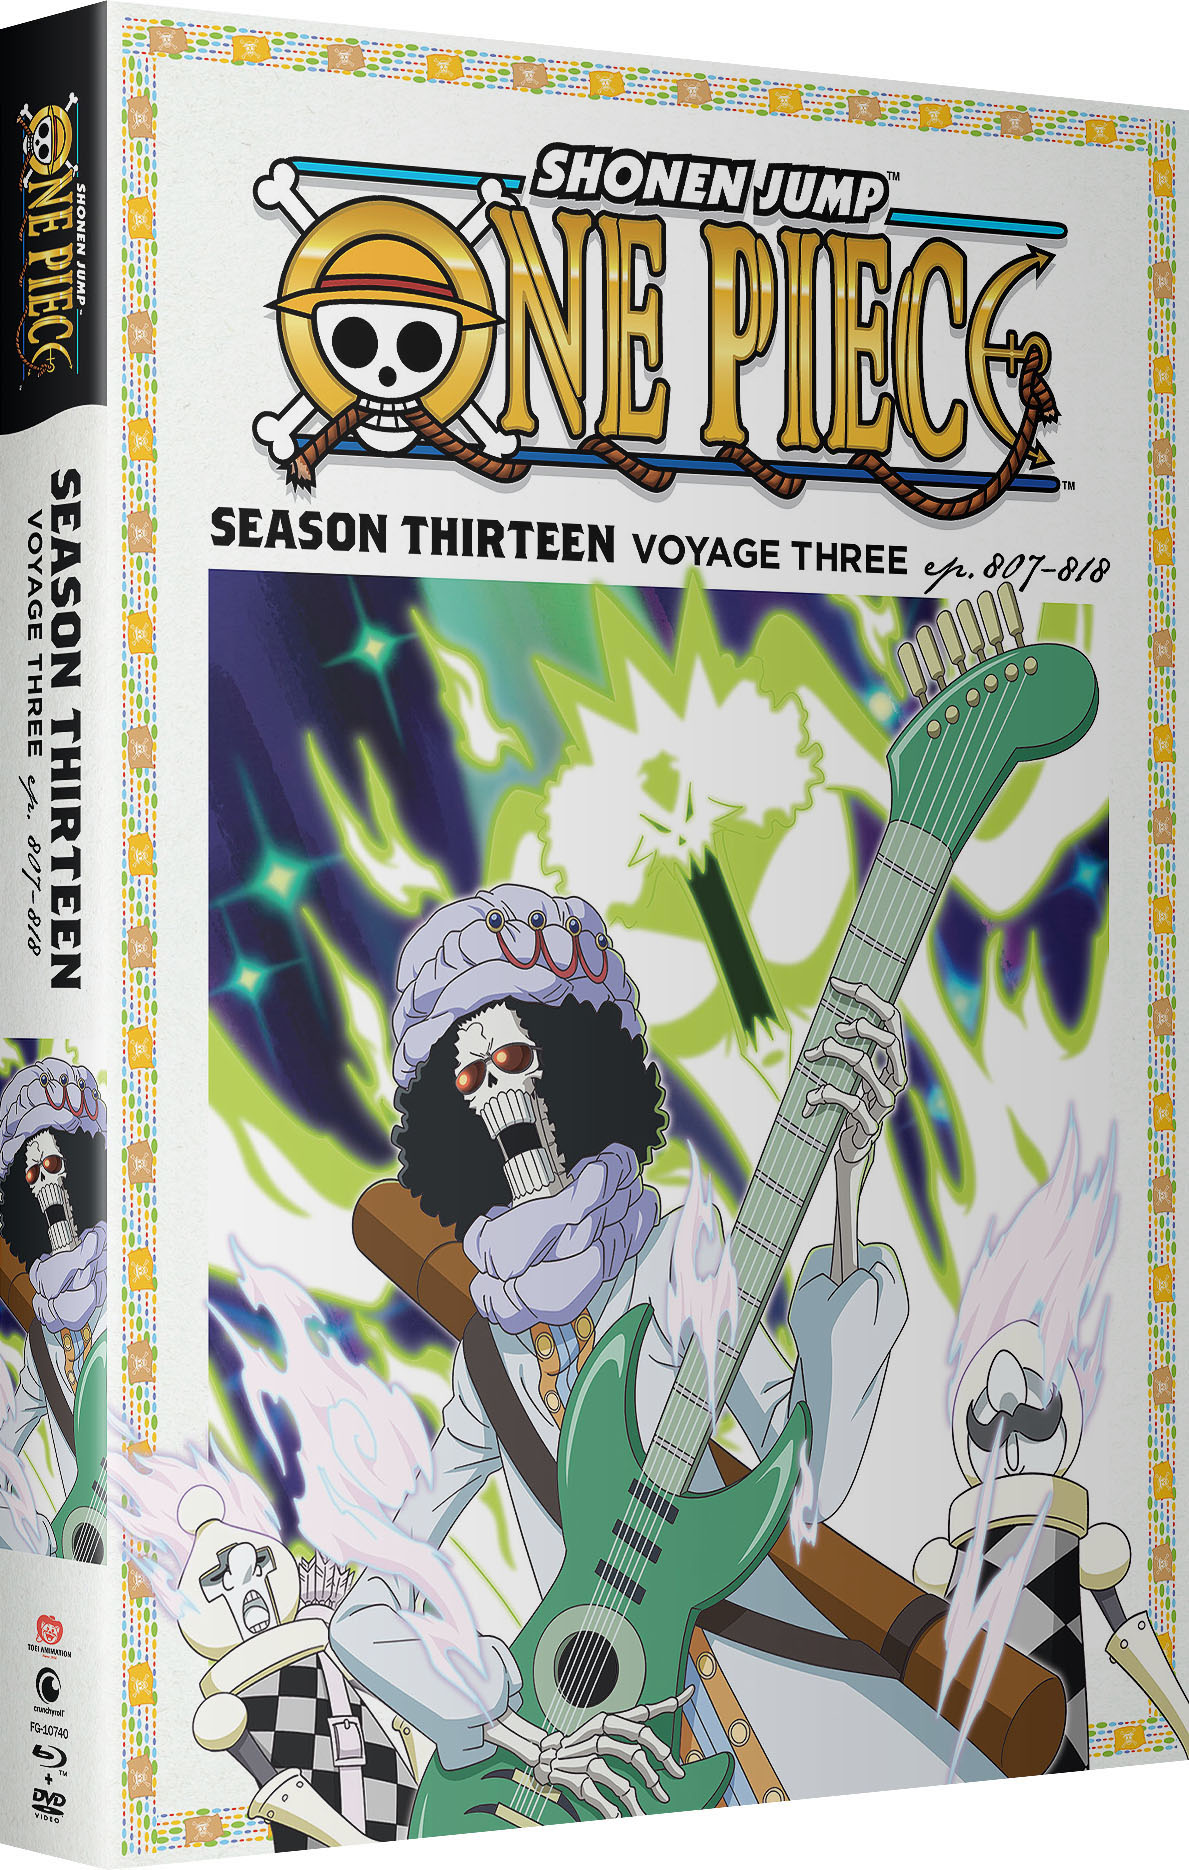 One Piece-TV-Serie-Vol. 25-[DVD] [Import]